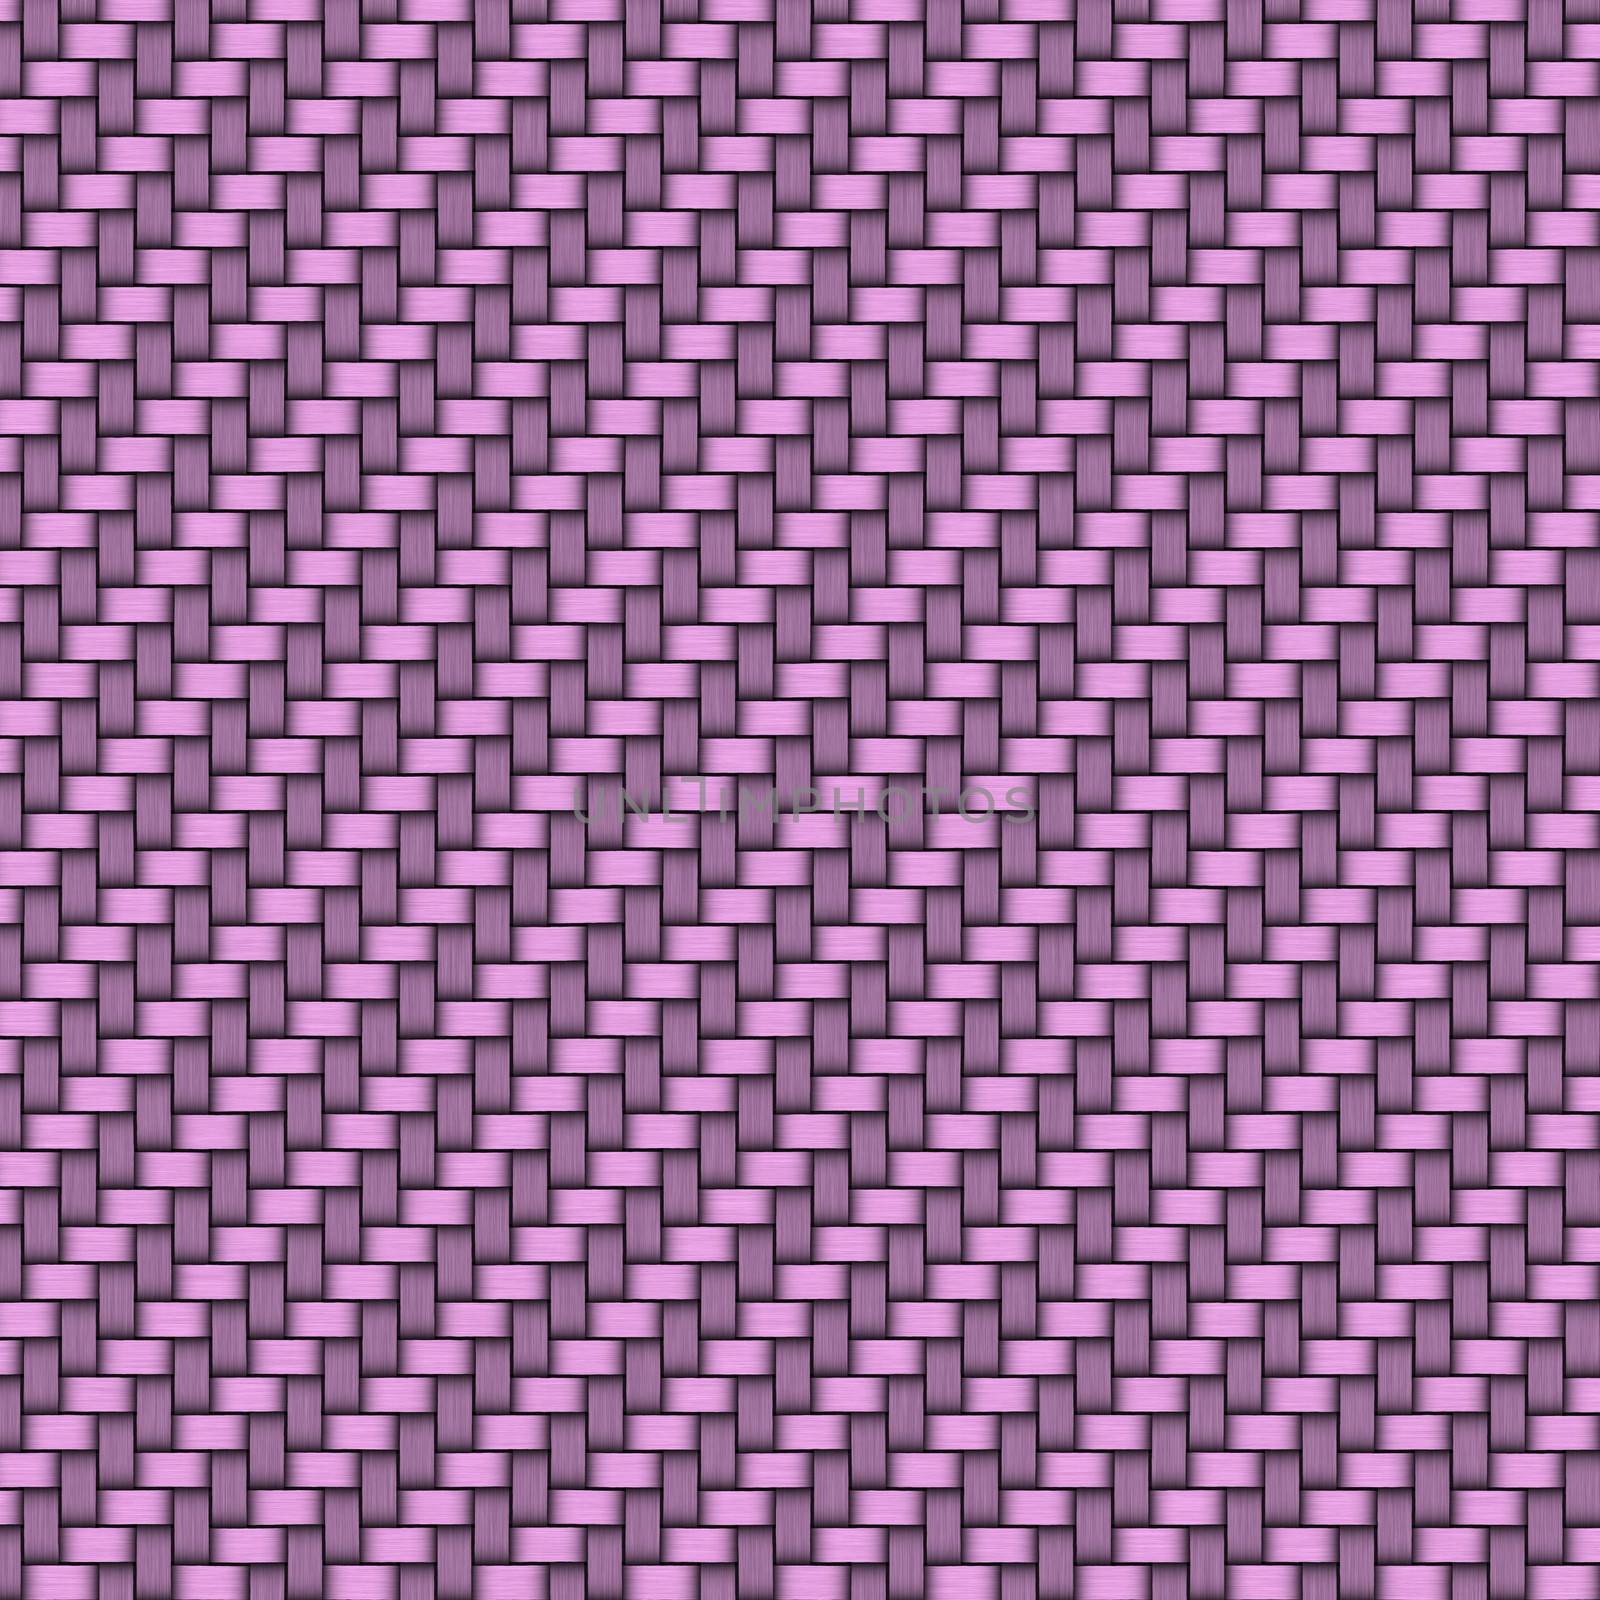 purple background woven pattern